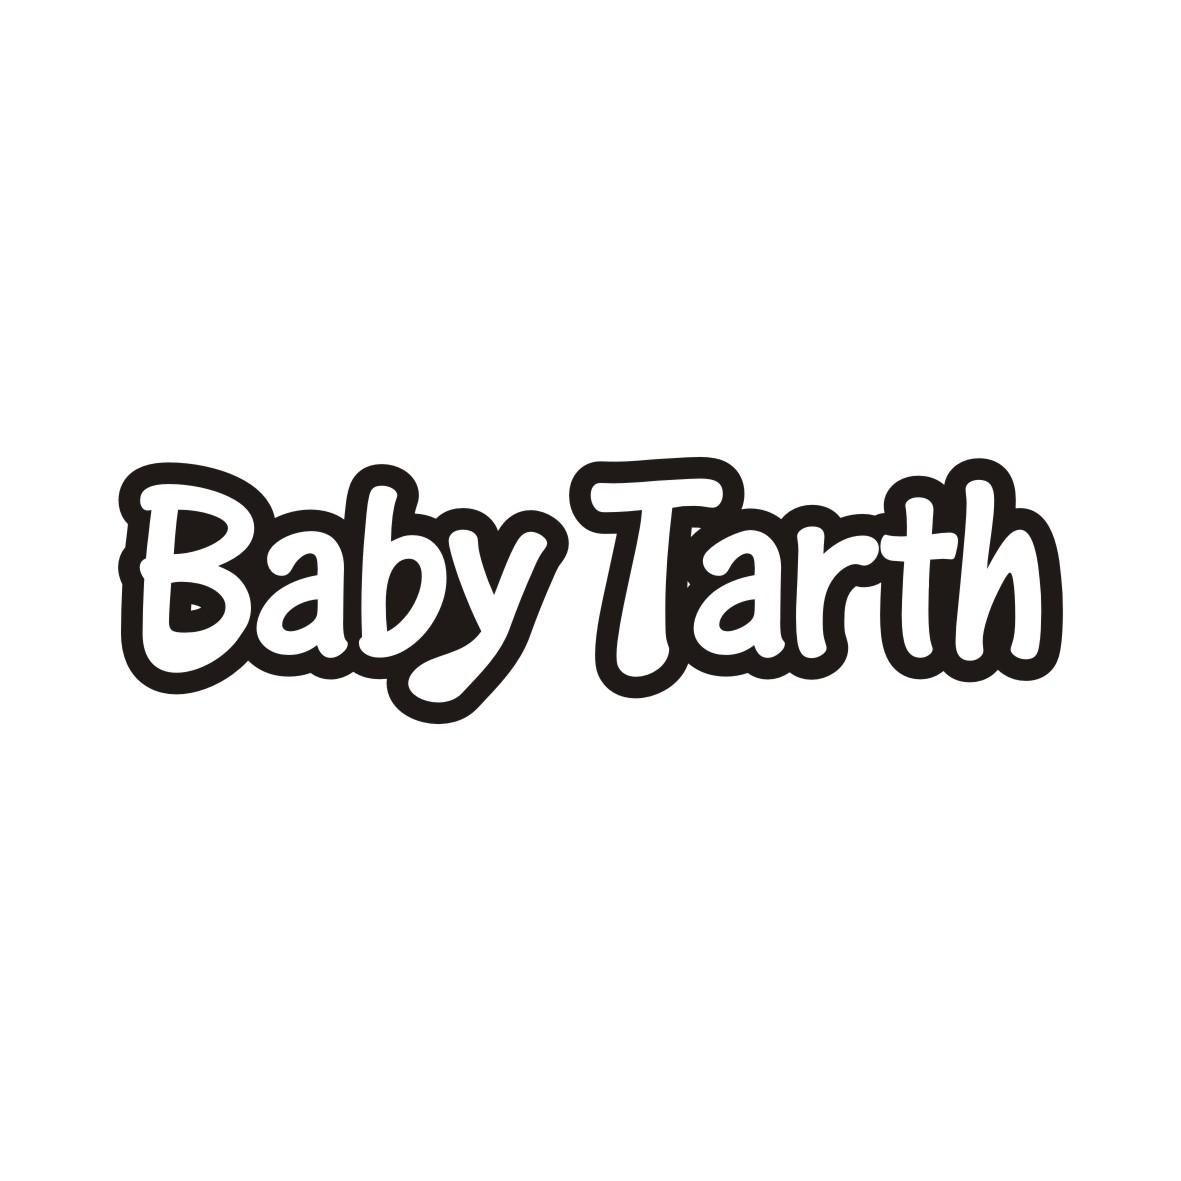 42类-网站服务BABY TARTH商标转让